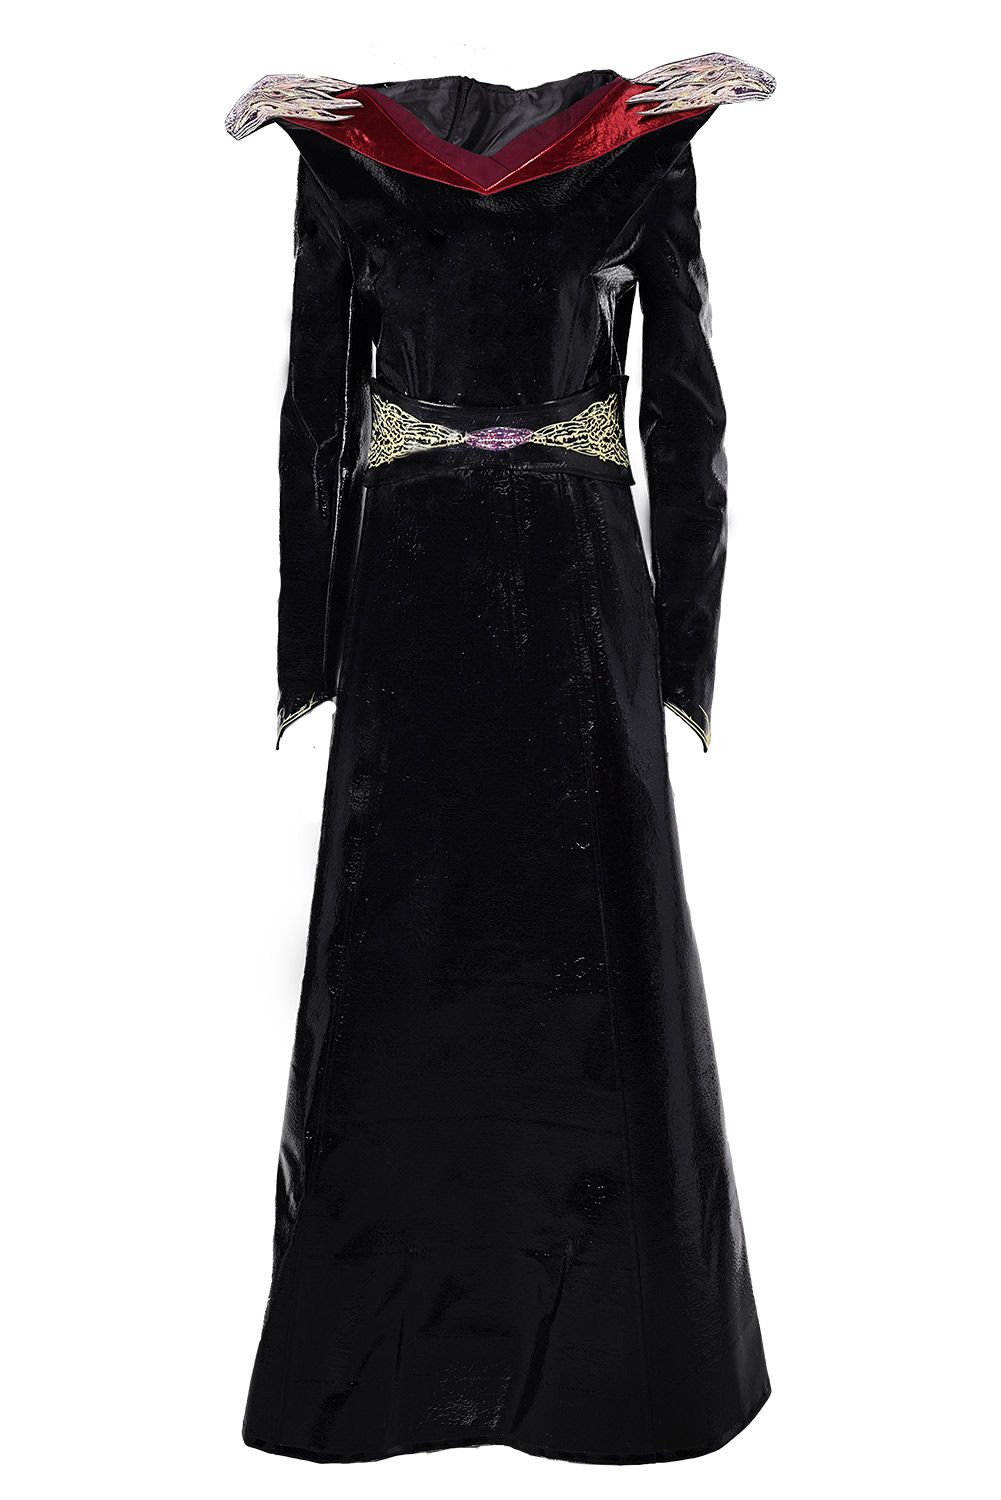 TV House of the Dragon Season 2 Princess Rhaenys Targaryen Dress 3 Piece Set Outfits Halloween Carnival Suit Cosplay Costume